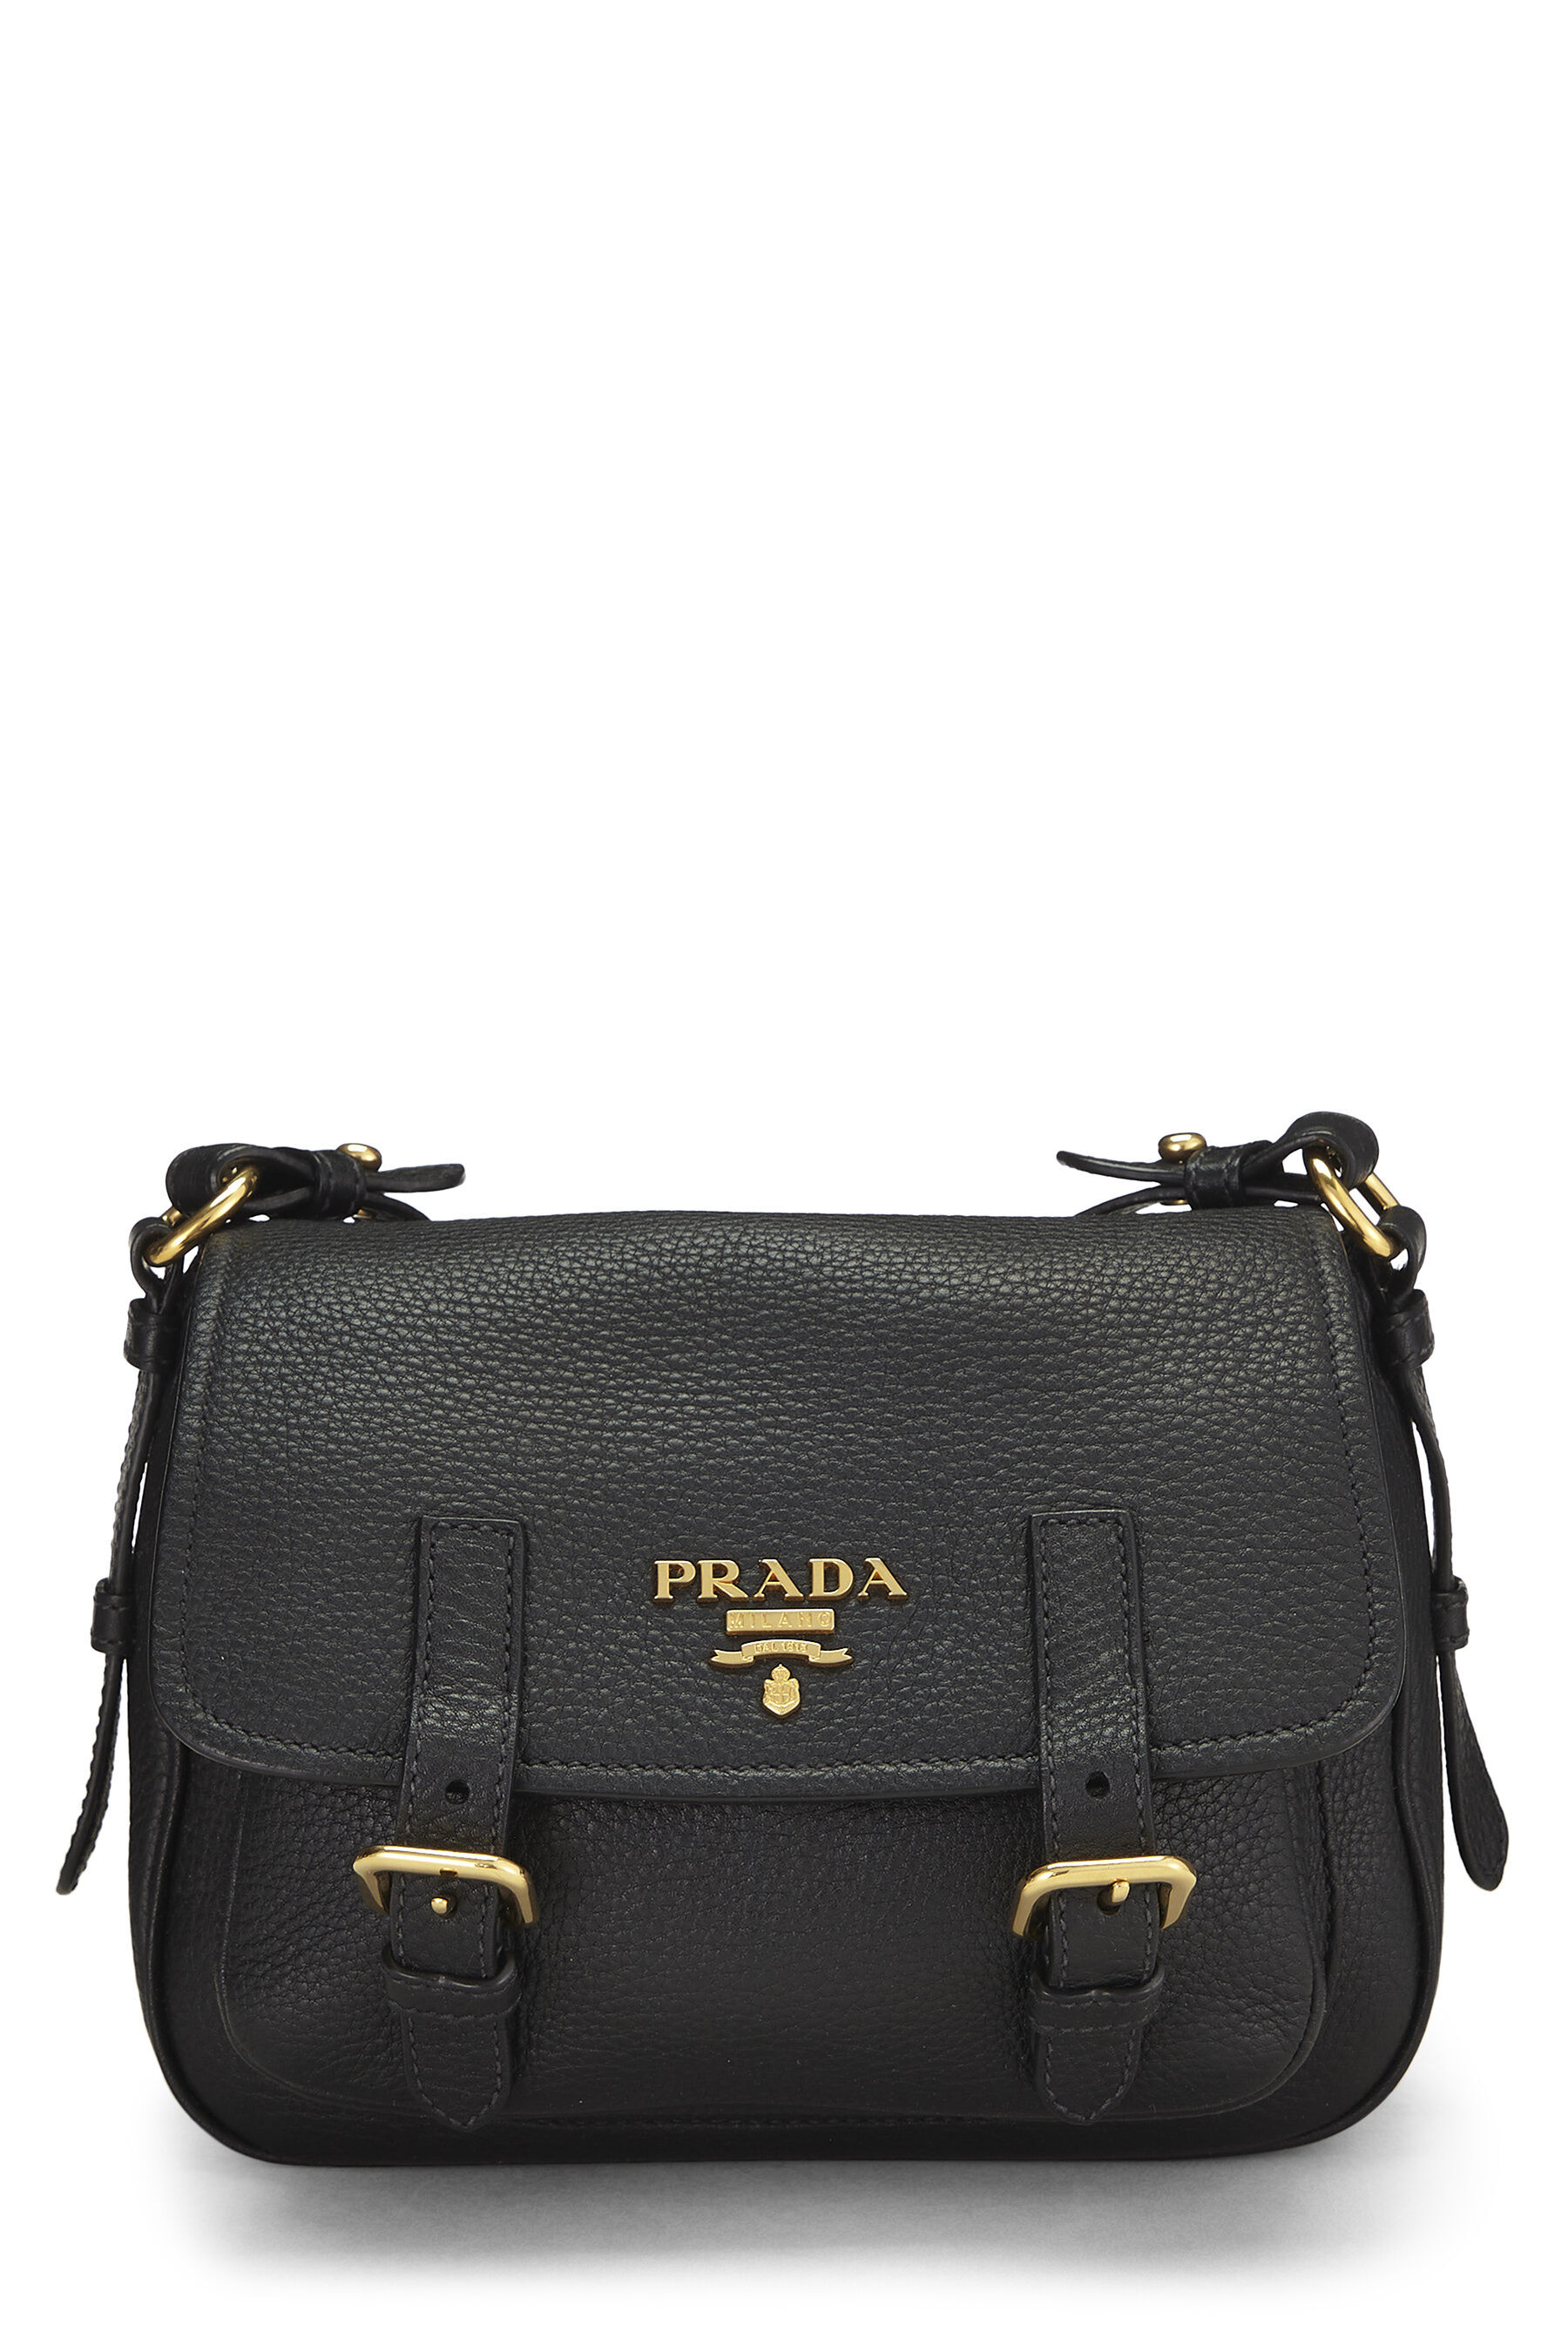 Prada | Bags | Vintage Prada Handbag | Poshmark